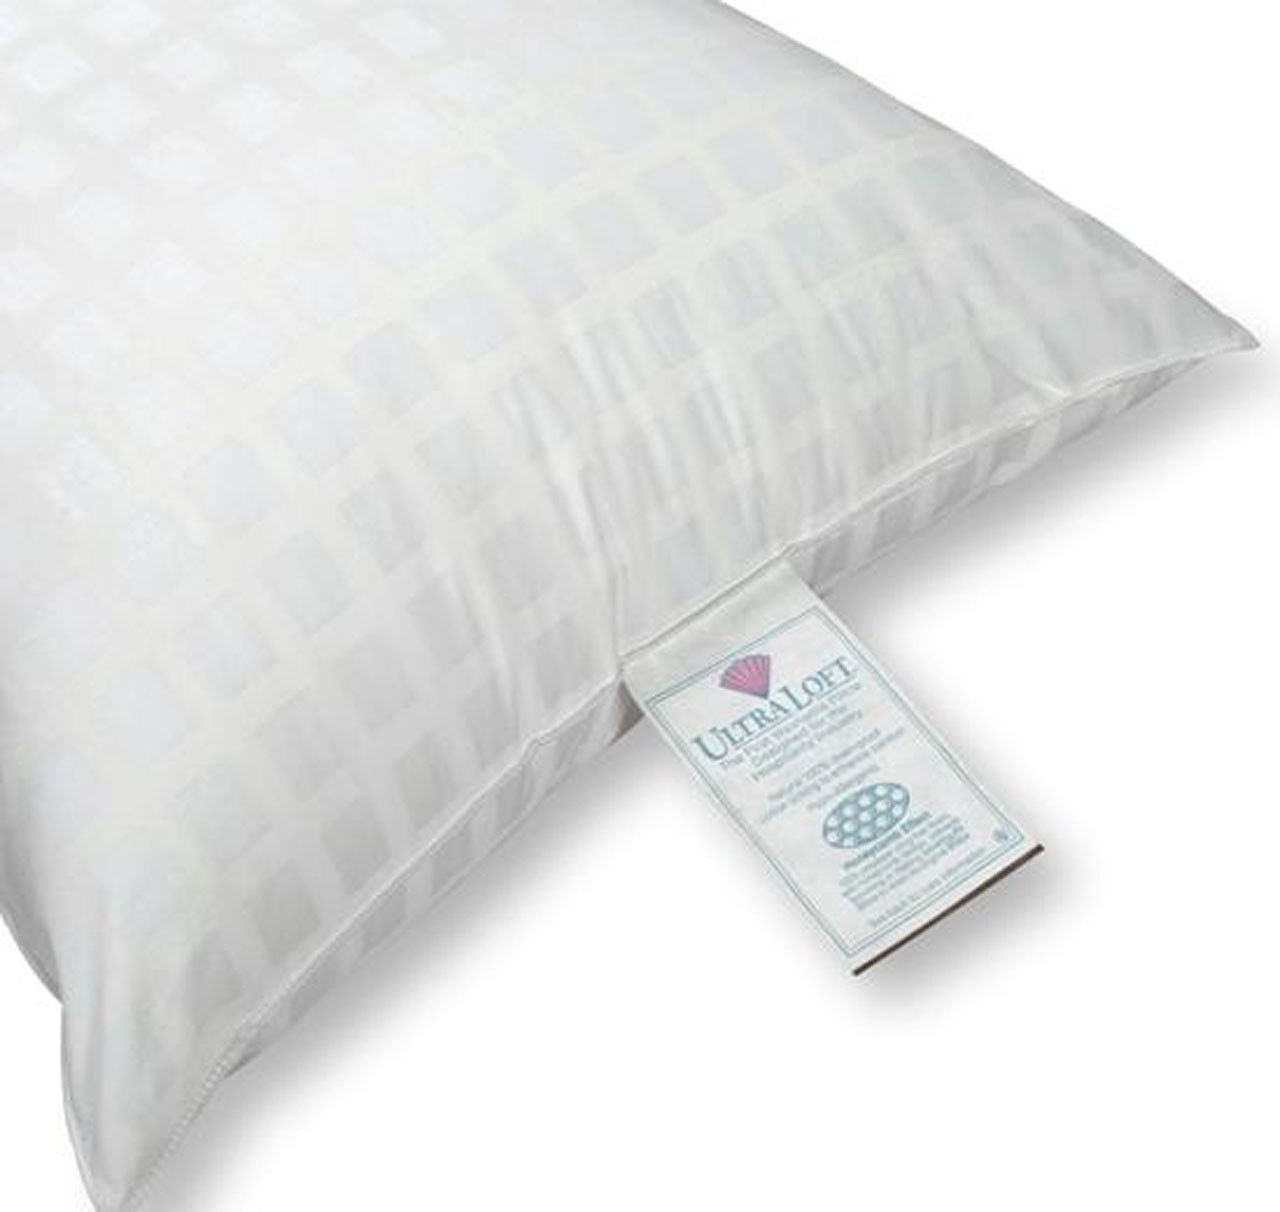 What sets the Honeycomb Fiber Effect of the UltraLoft Pillow apart?